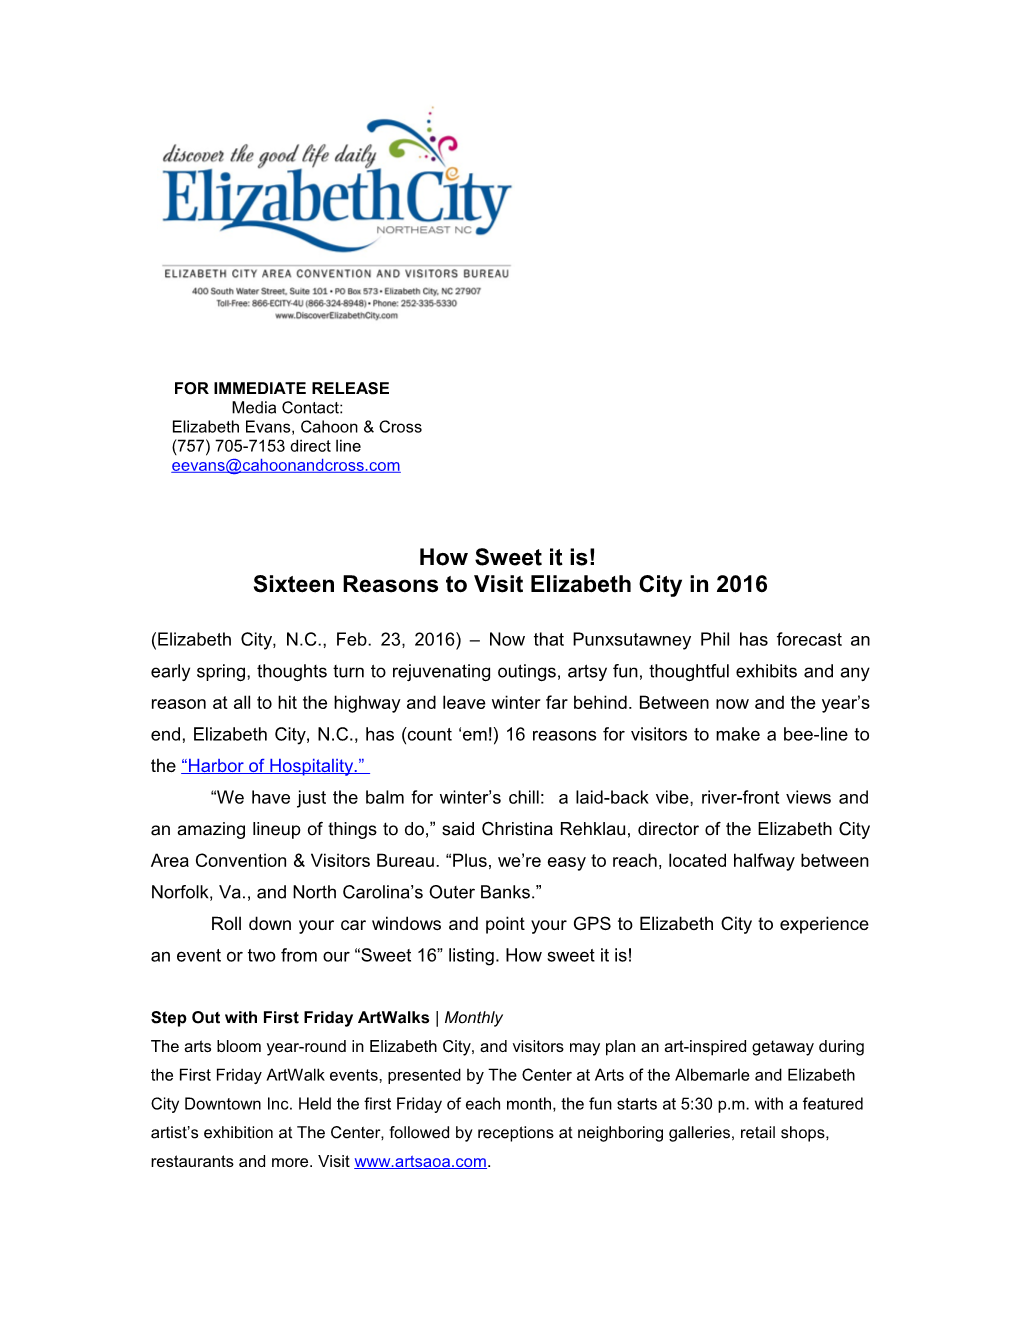 Sixteen Reasons to Visit Elizabeth City in 2016